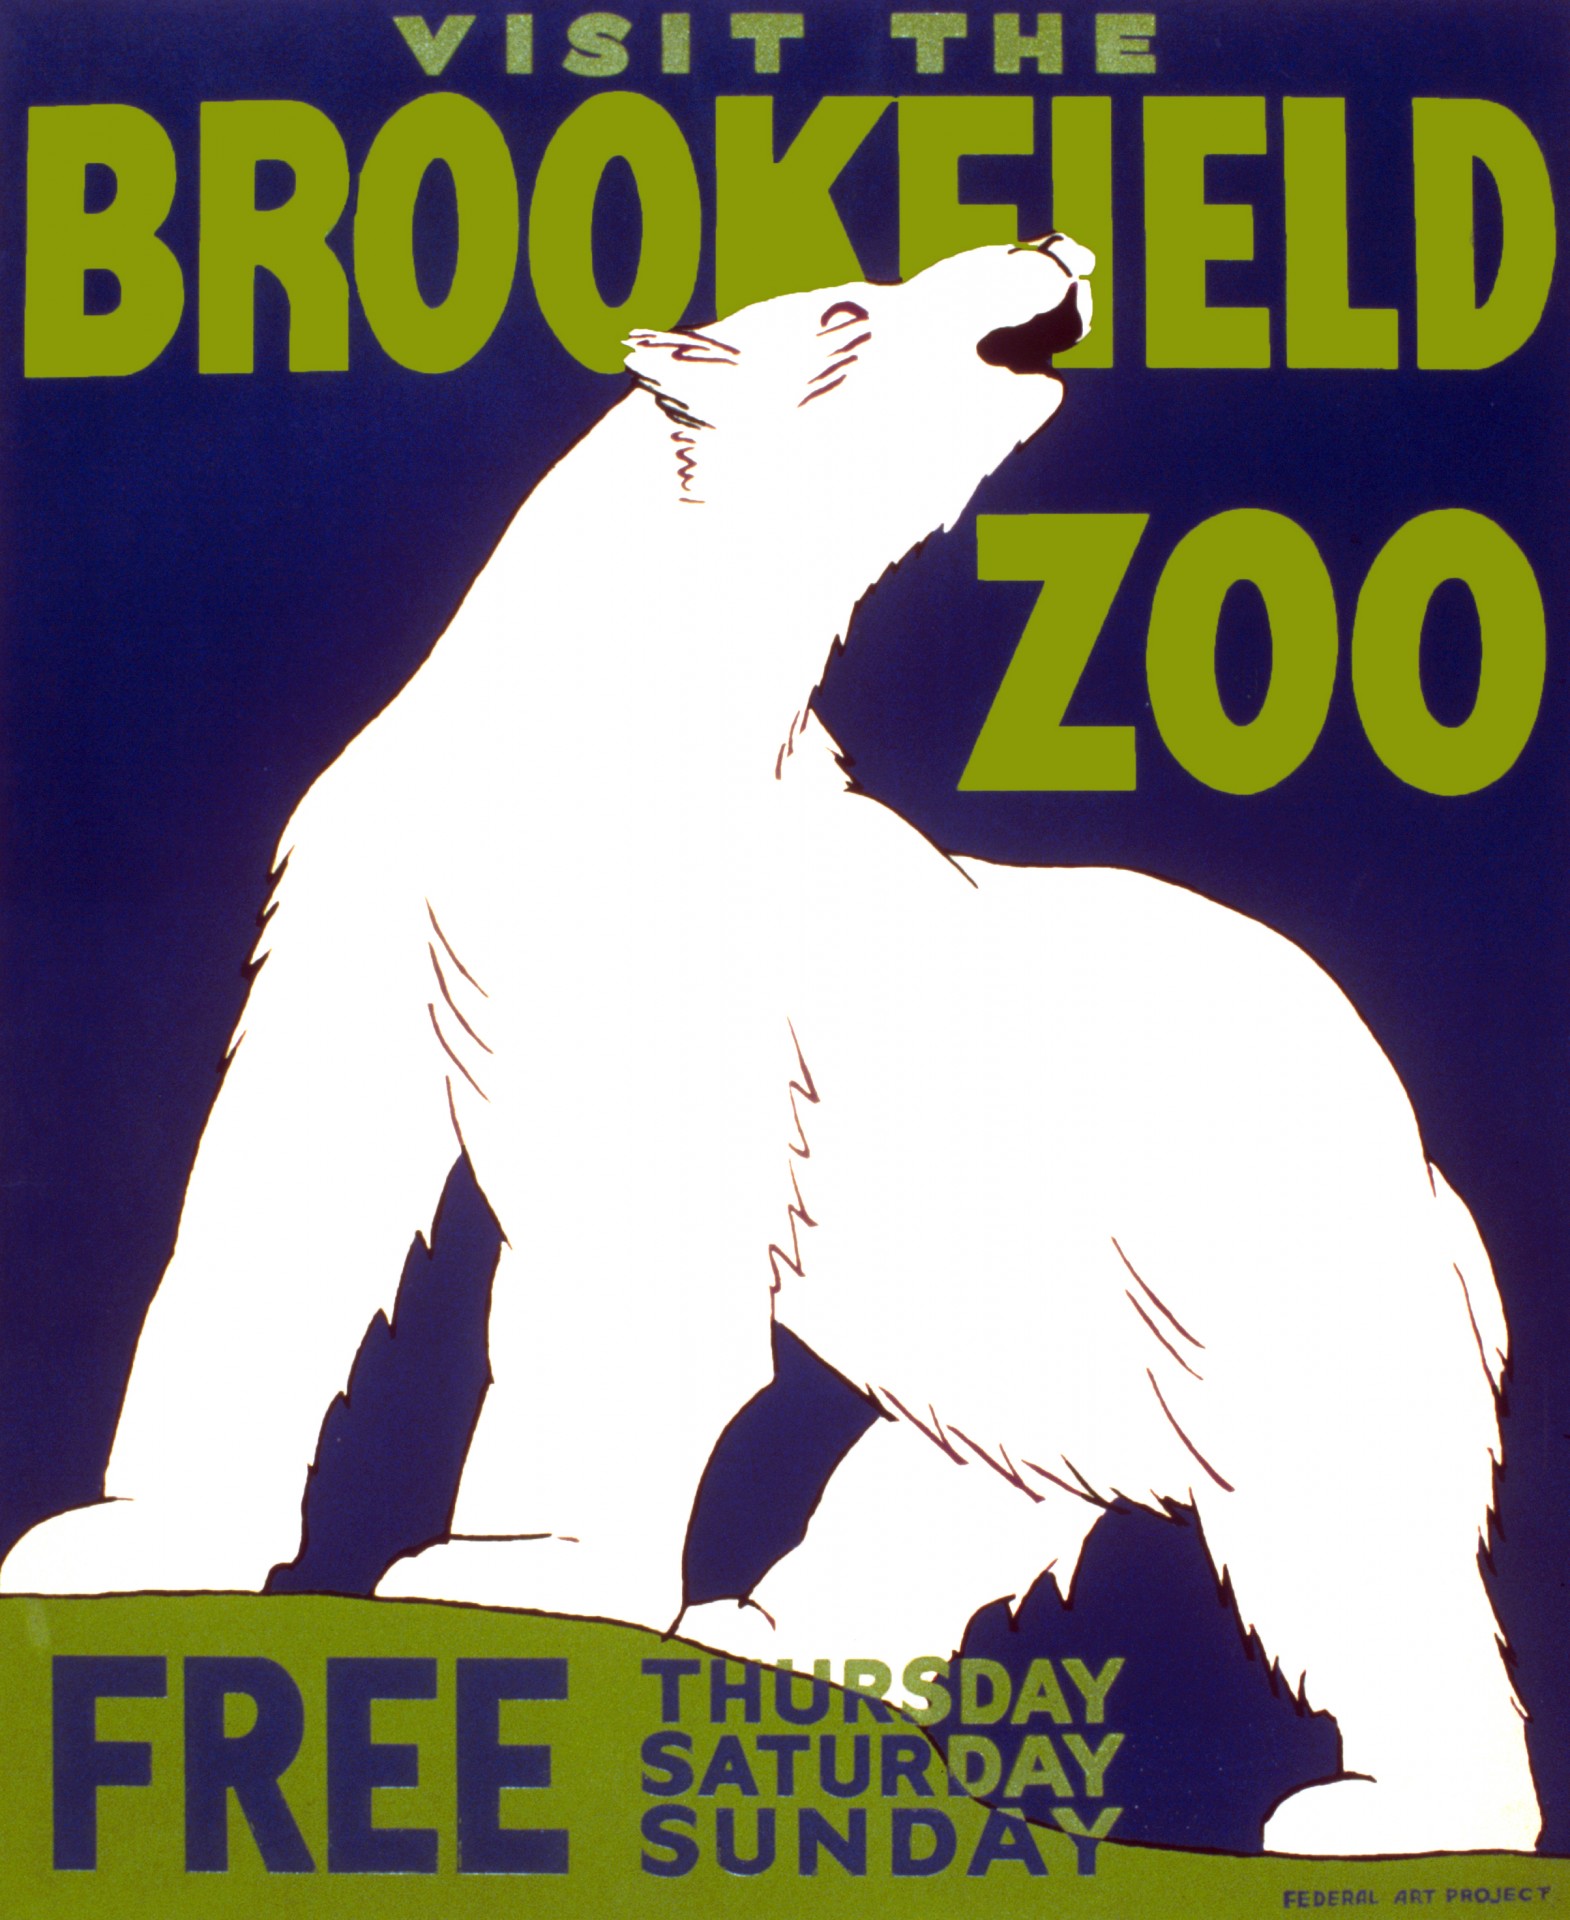 zoo visit brookfield free photo